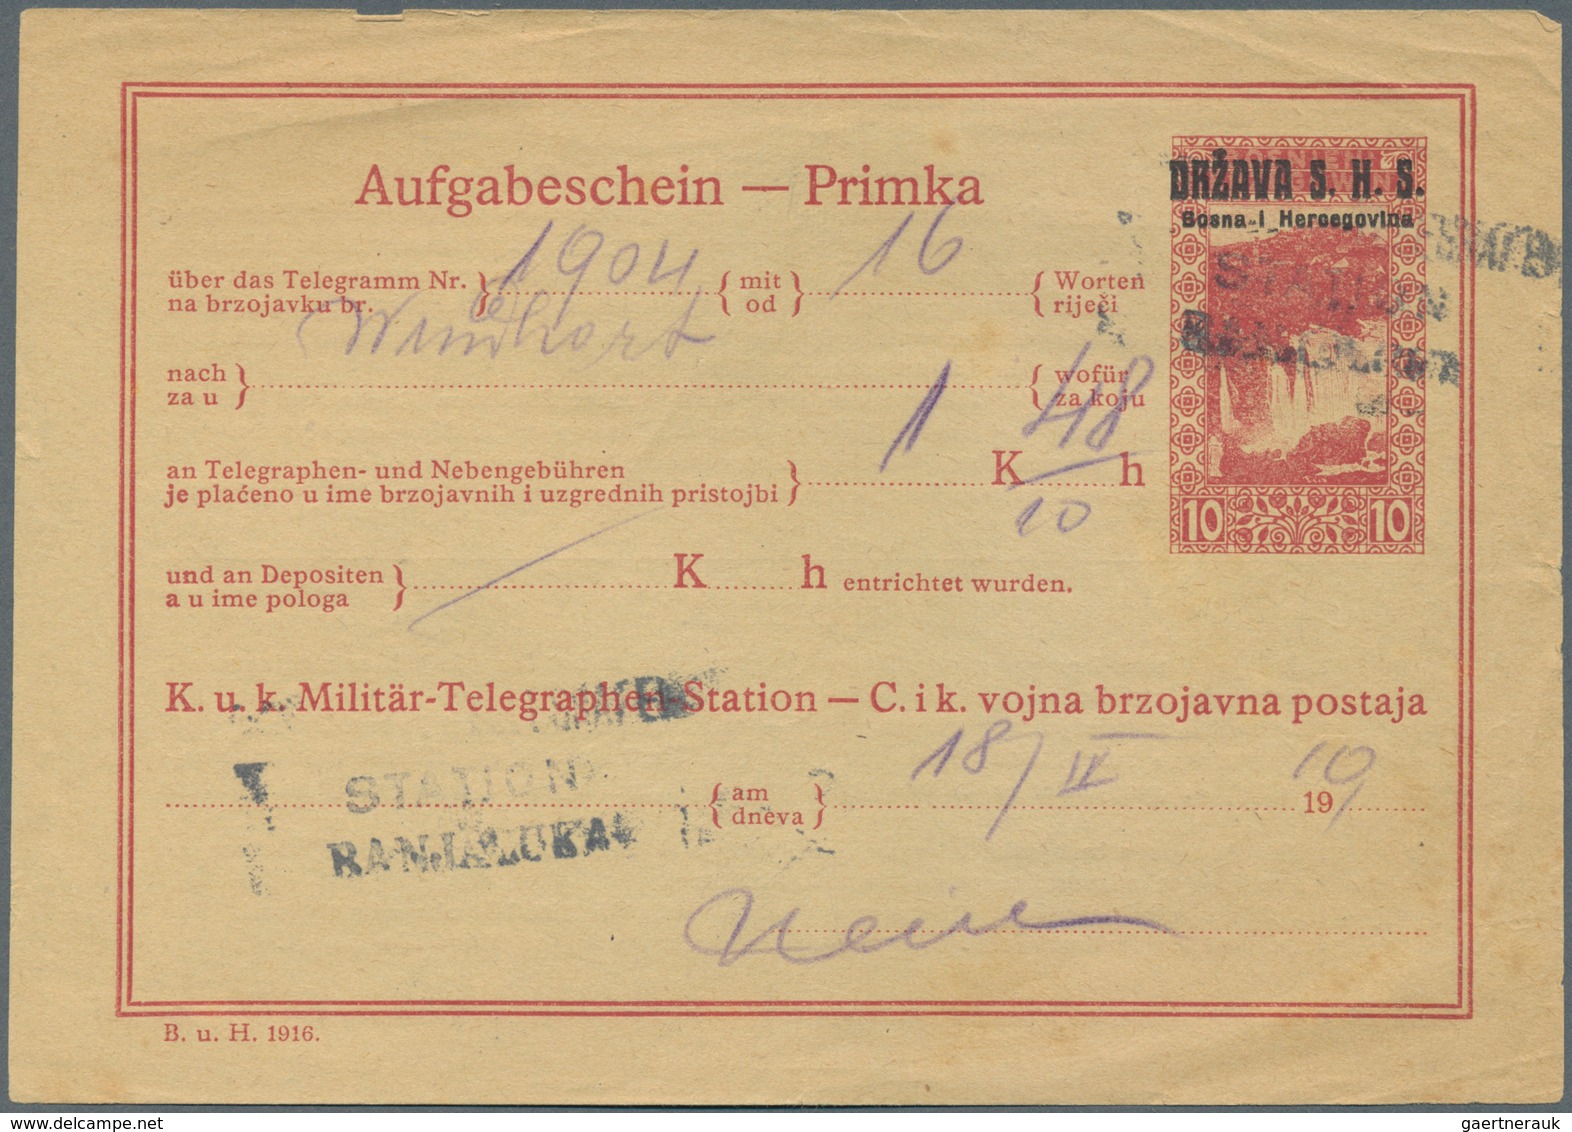 Jugoslawien - Ganzsachen: 1919 Used Receipt For Telegrams With Imprint "DRZAVA S.H.S./Bosna I Herzeg - Ganzsachen